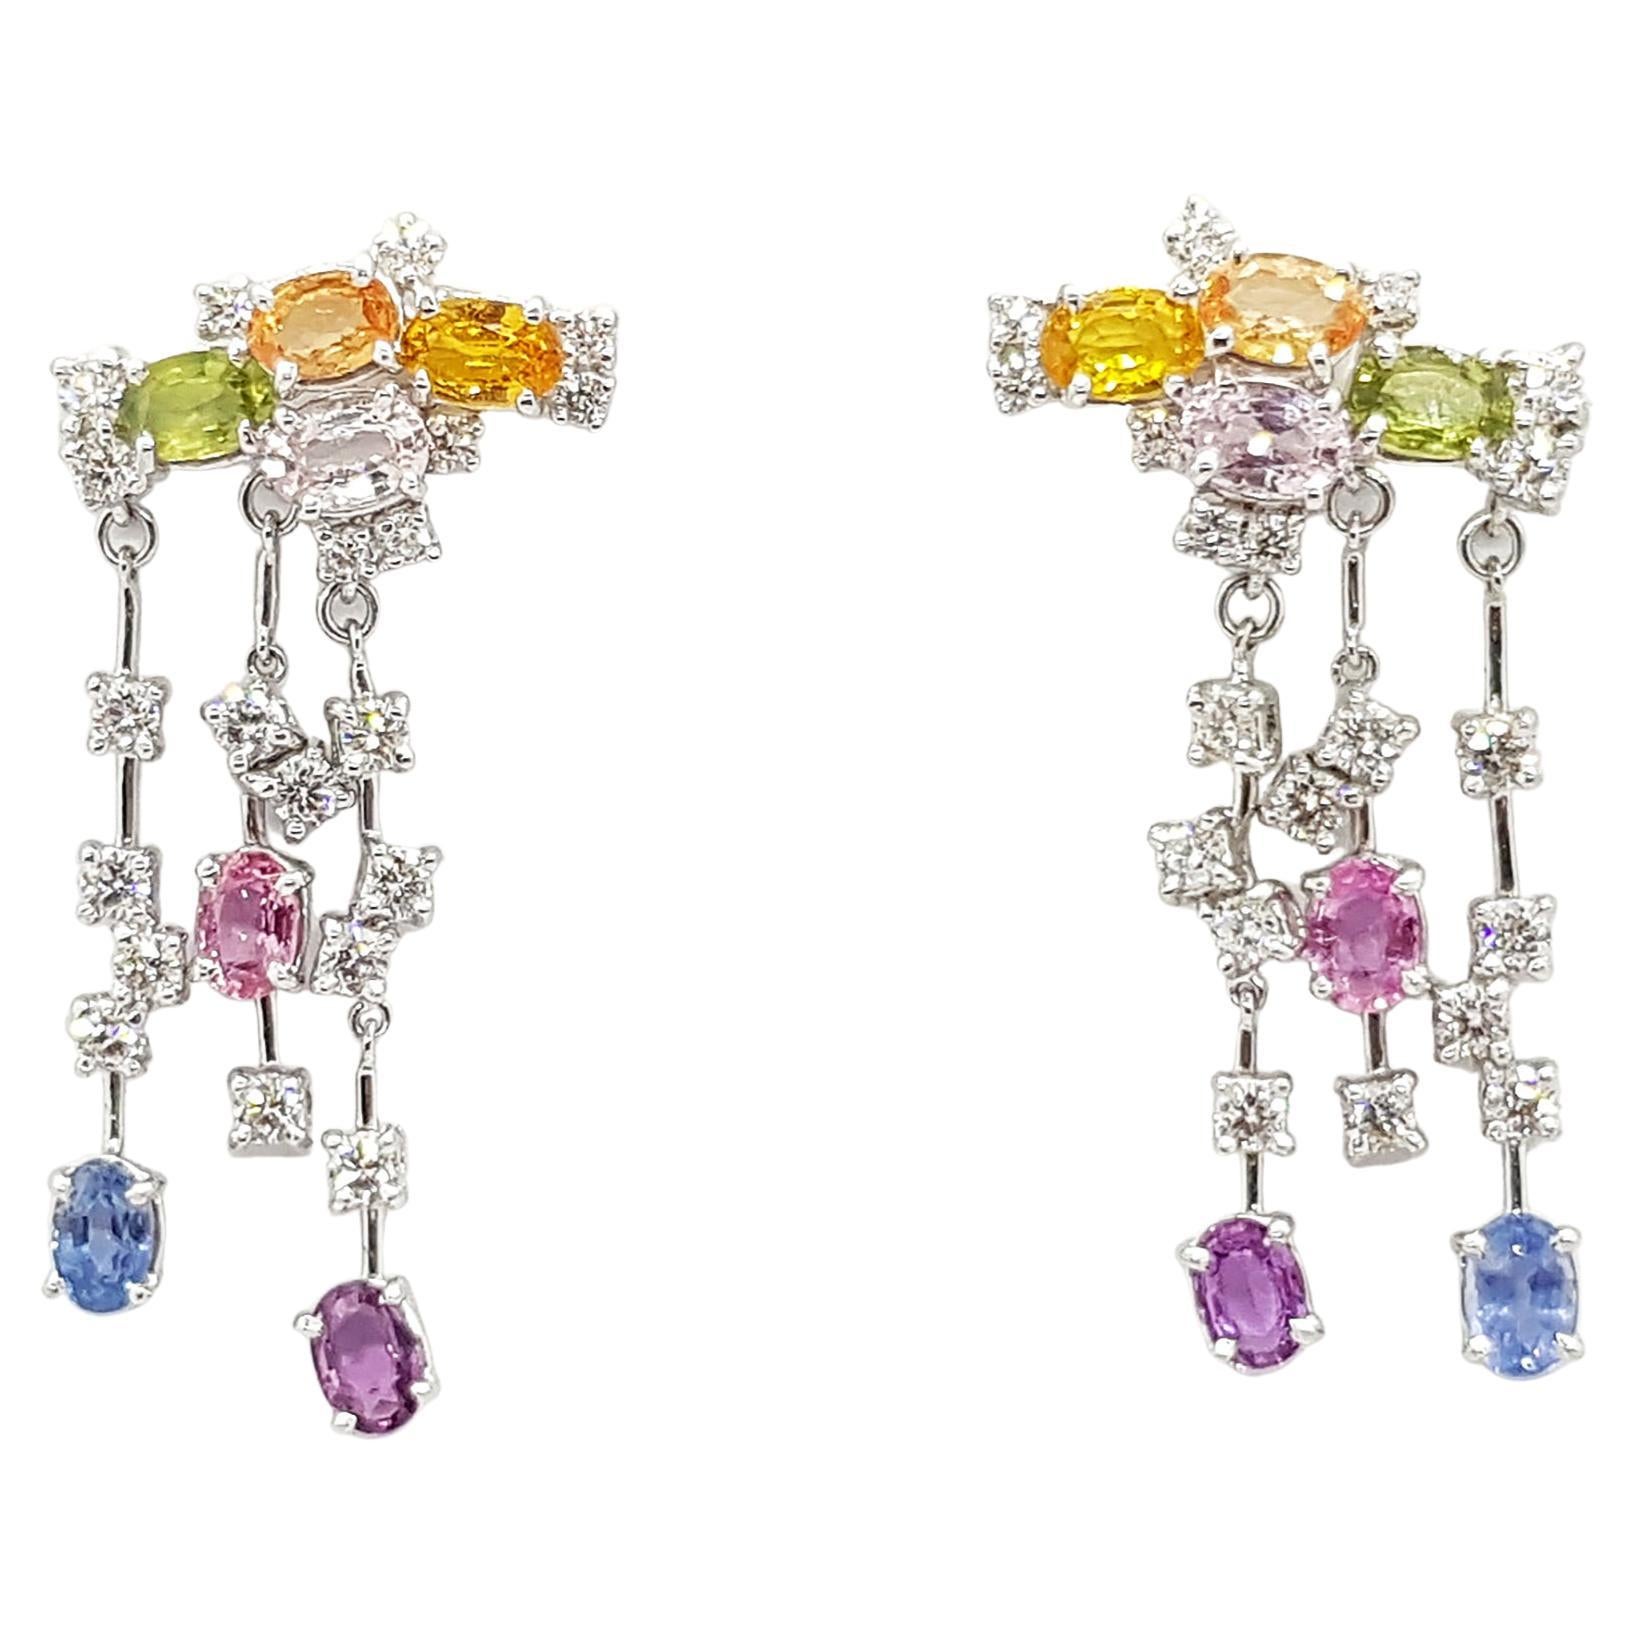 Rainbow Colour Sapphire with Diamond Earrings Set in 18 Karat White Gold Setting